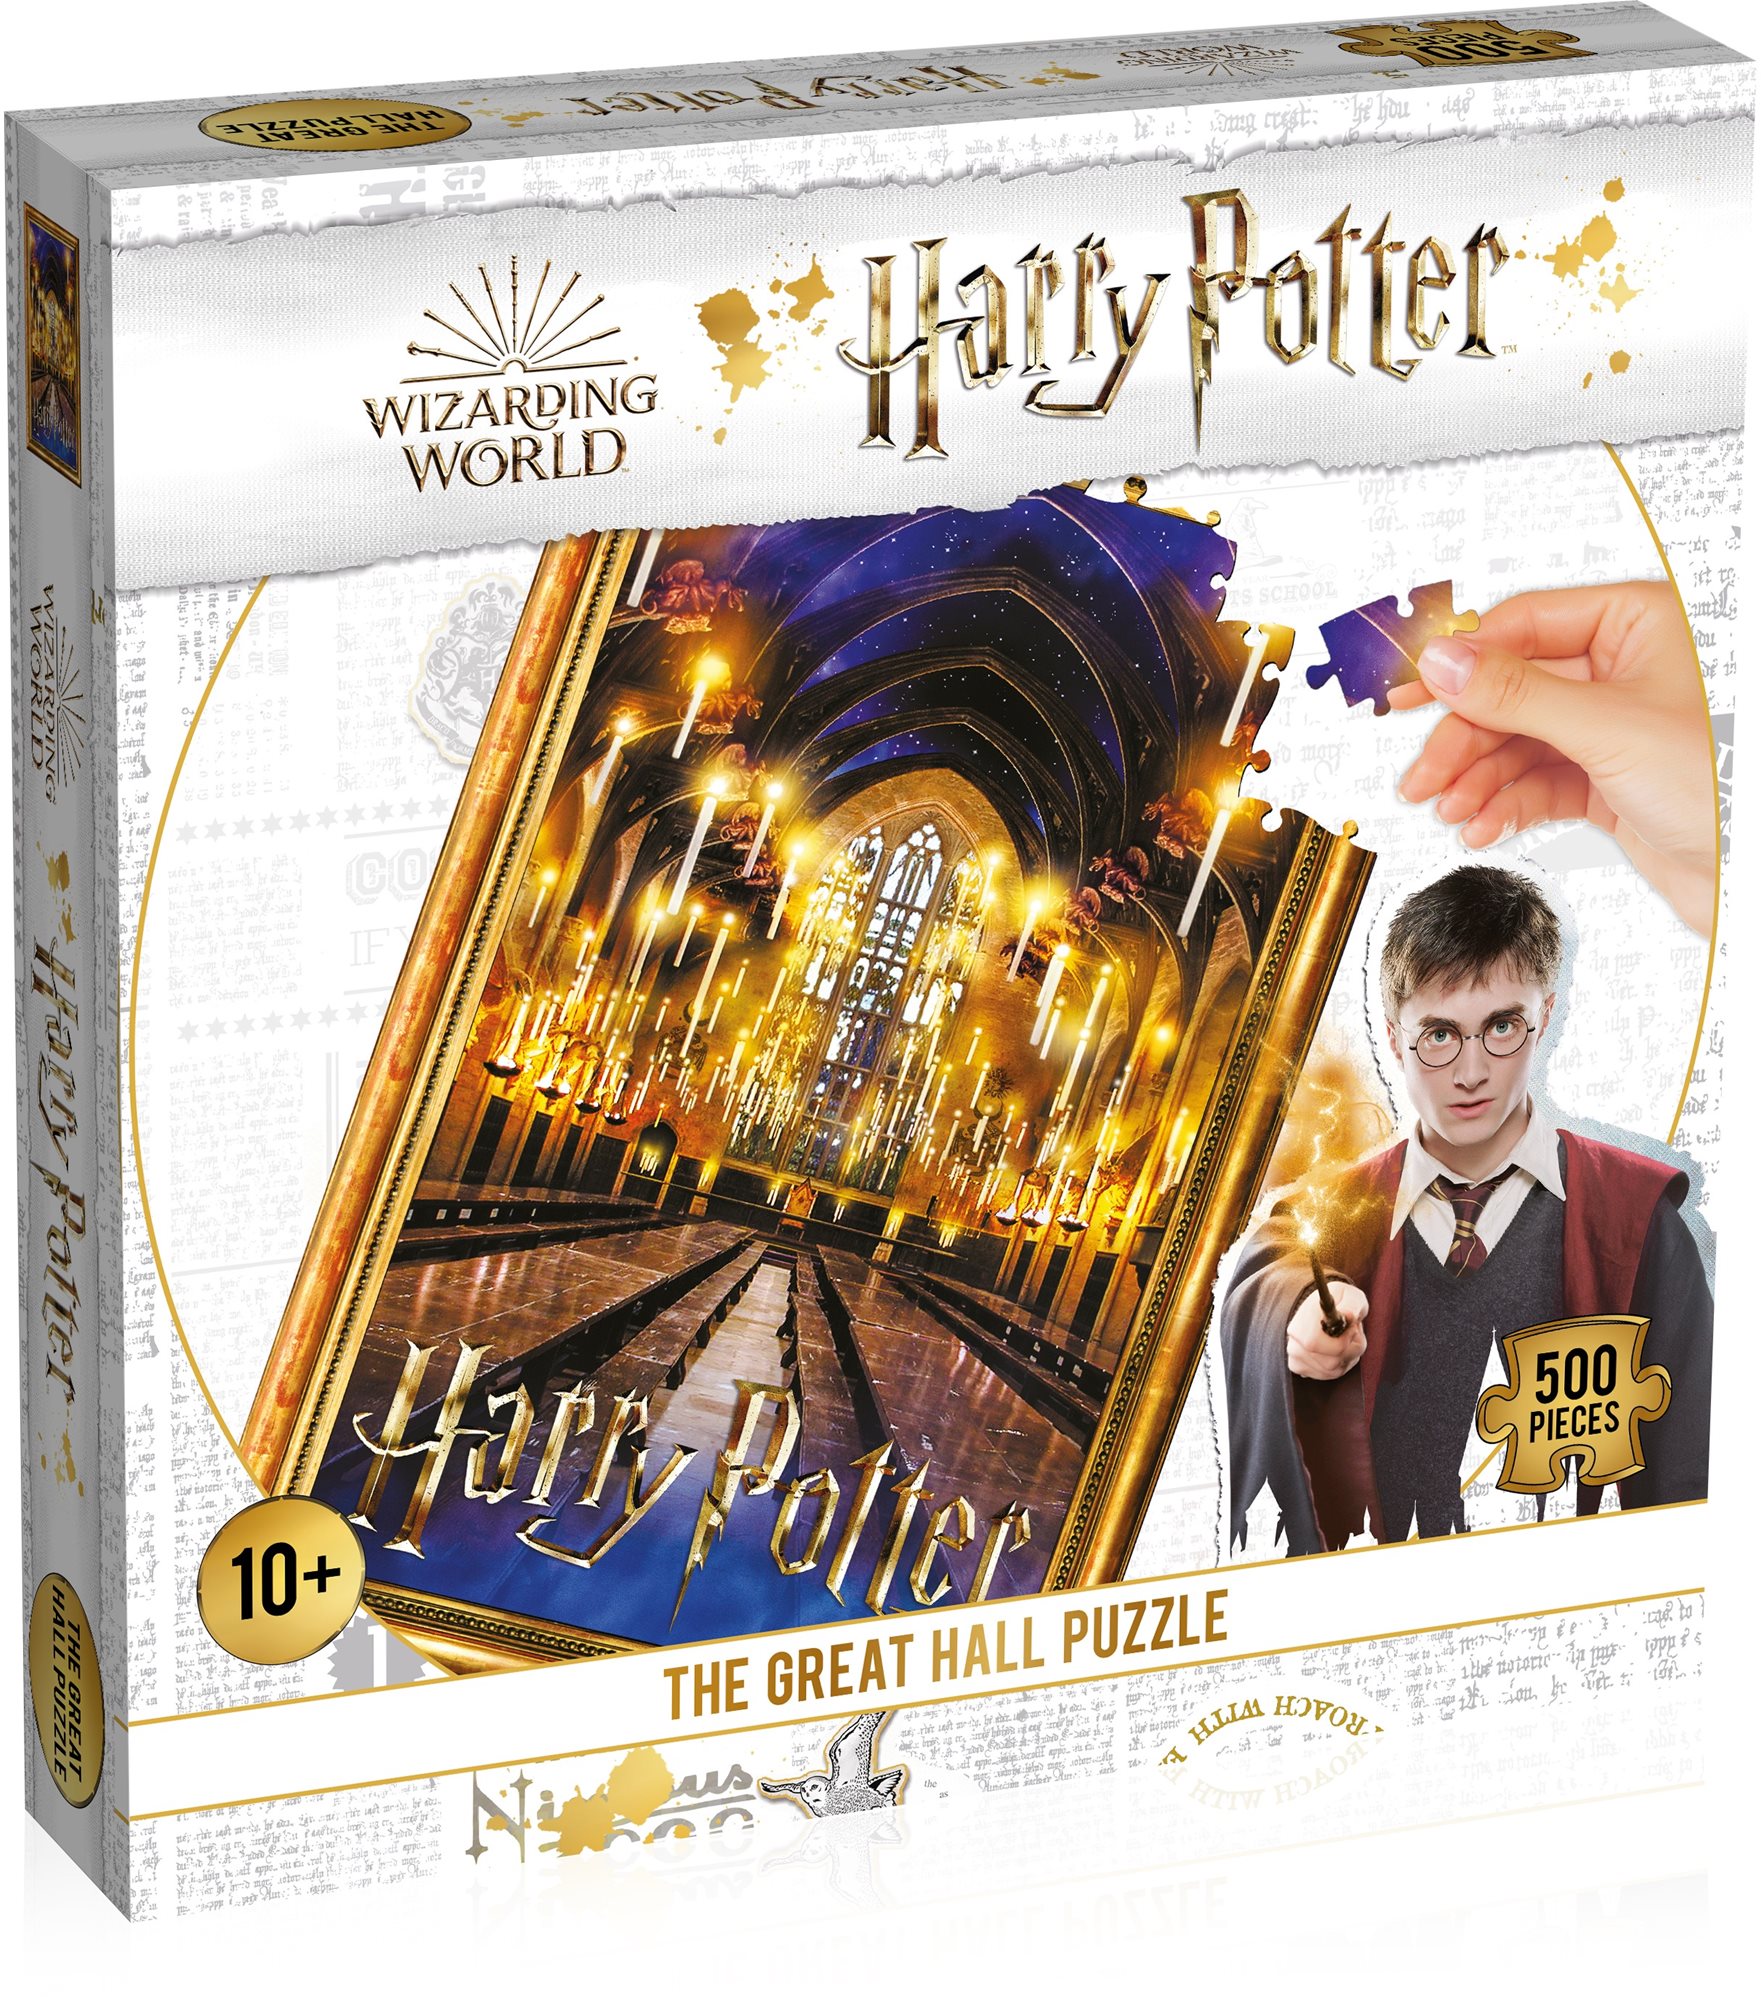 Puzzle Puzzle Harry Potter Great Hall Puzzles 500 pcs